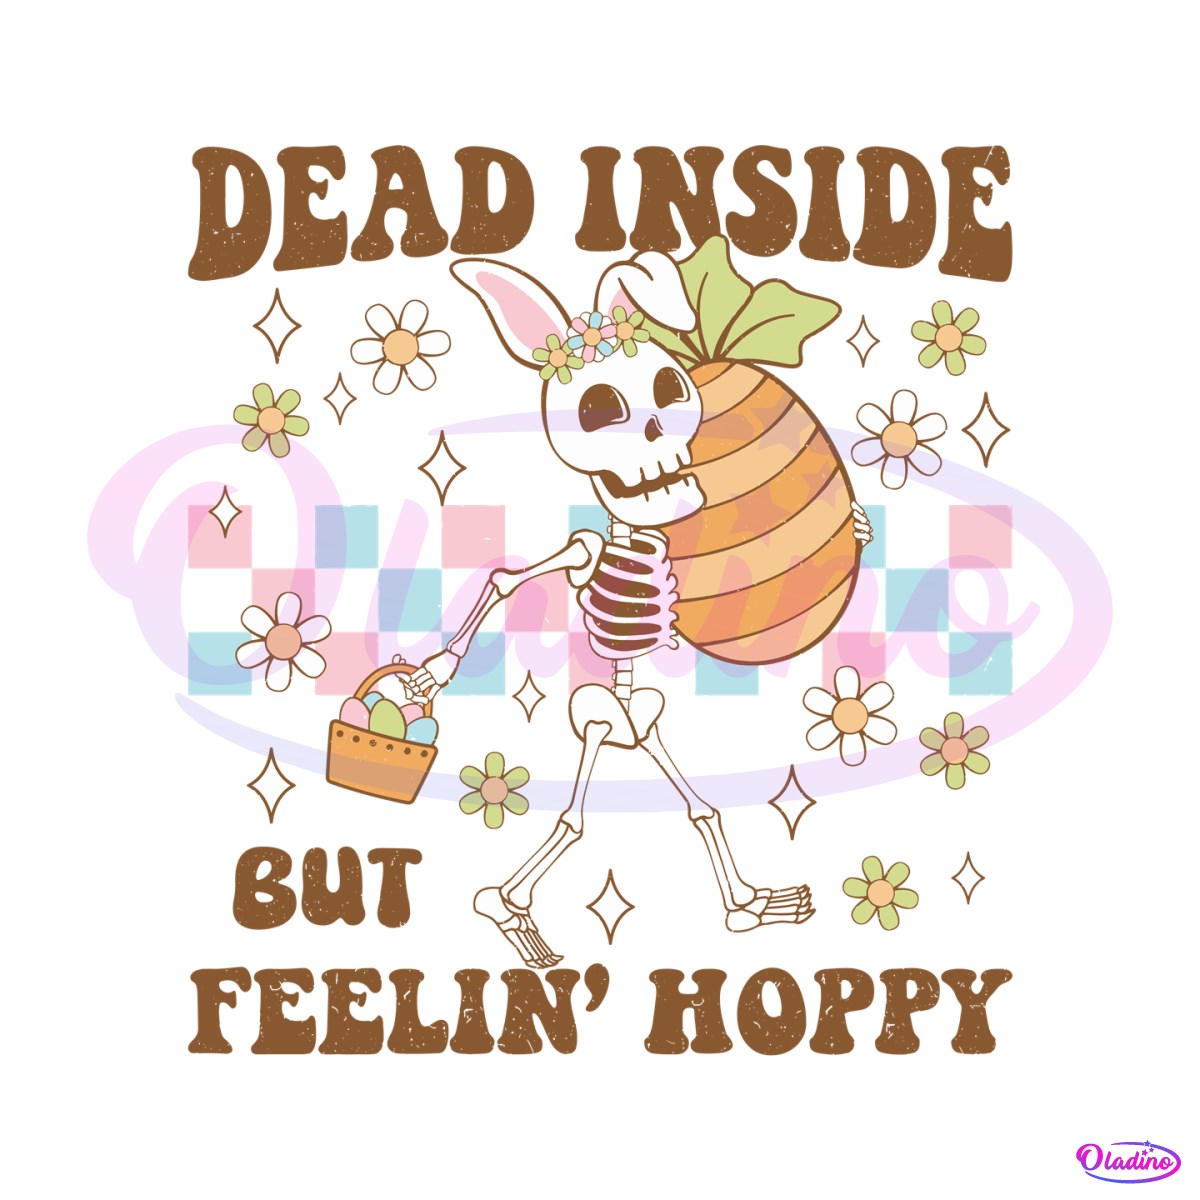 dead-inside-but-fellin-hoppy-svg